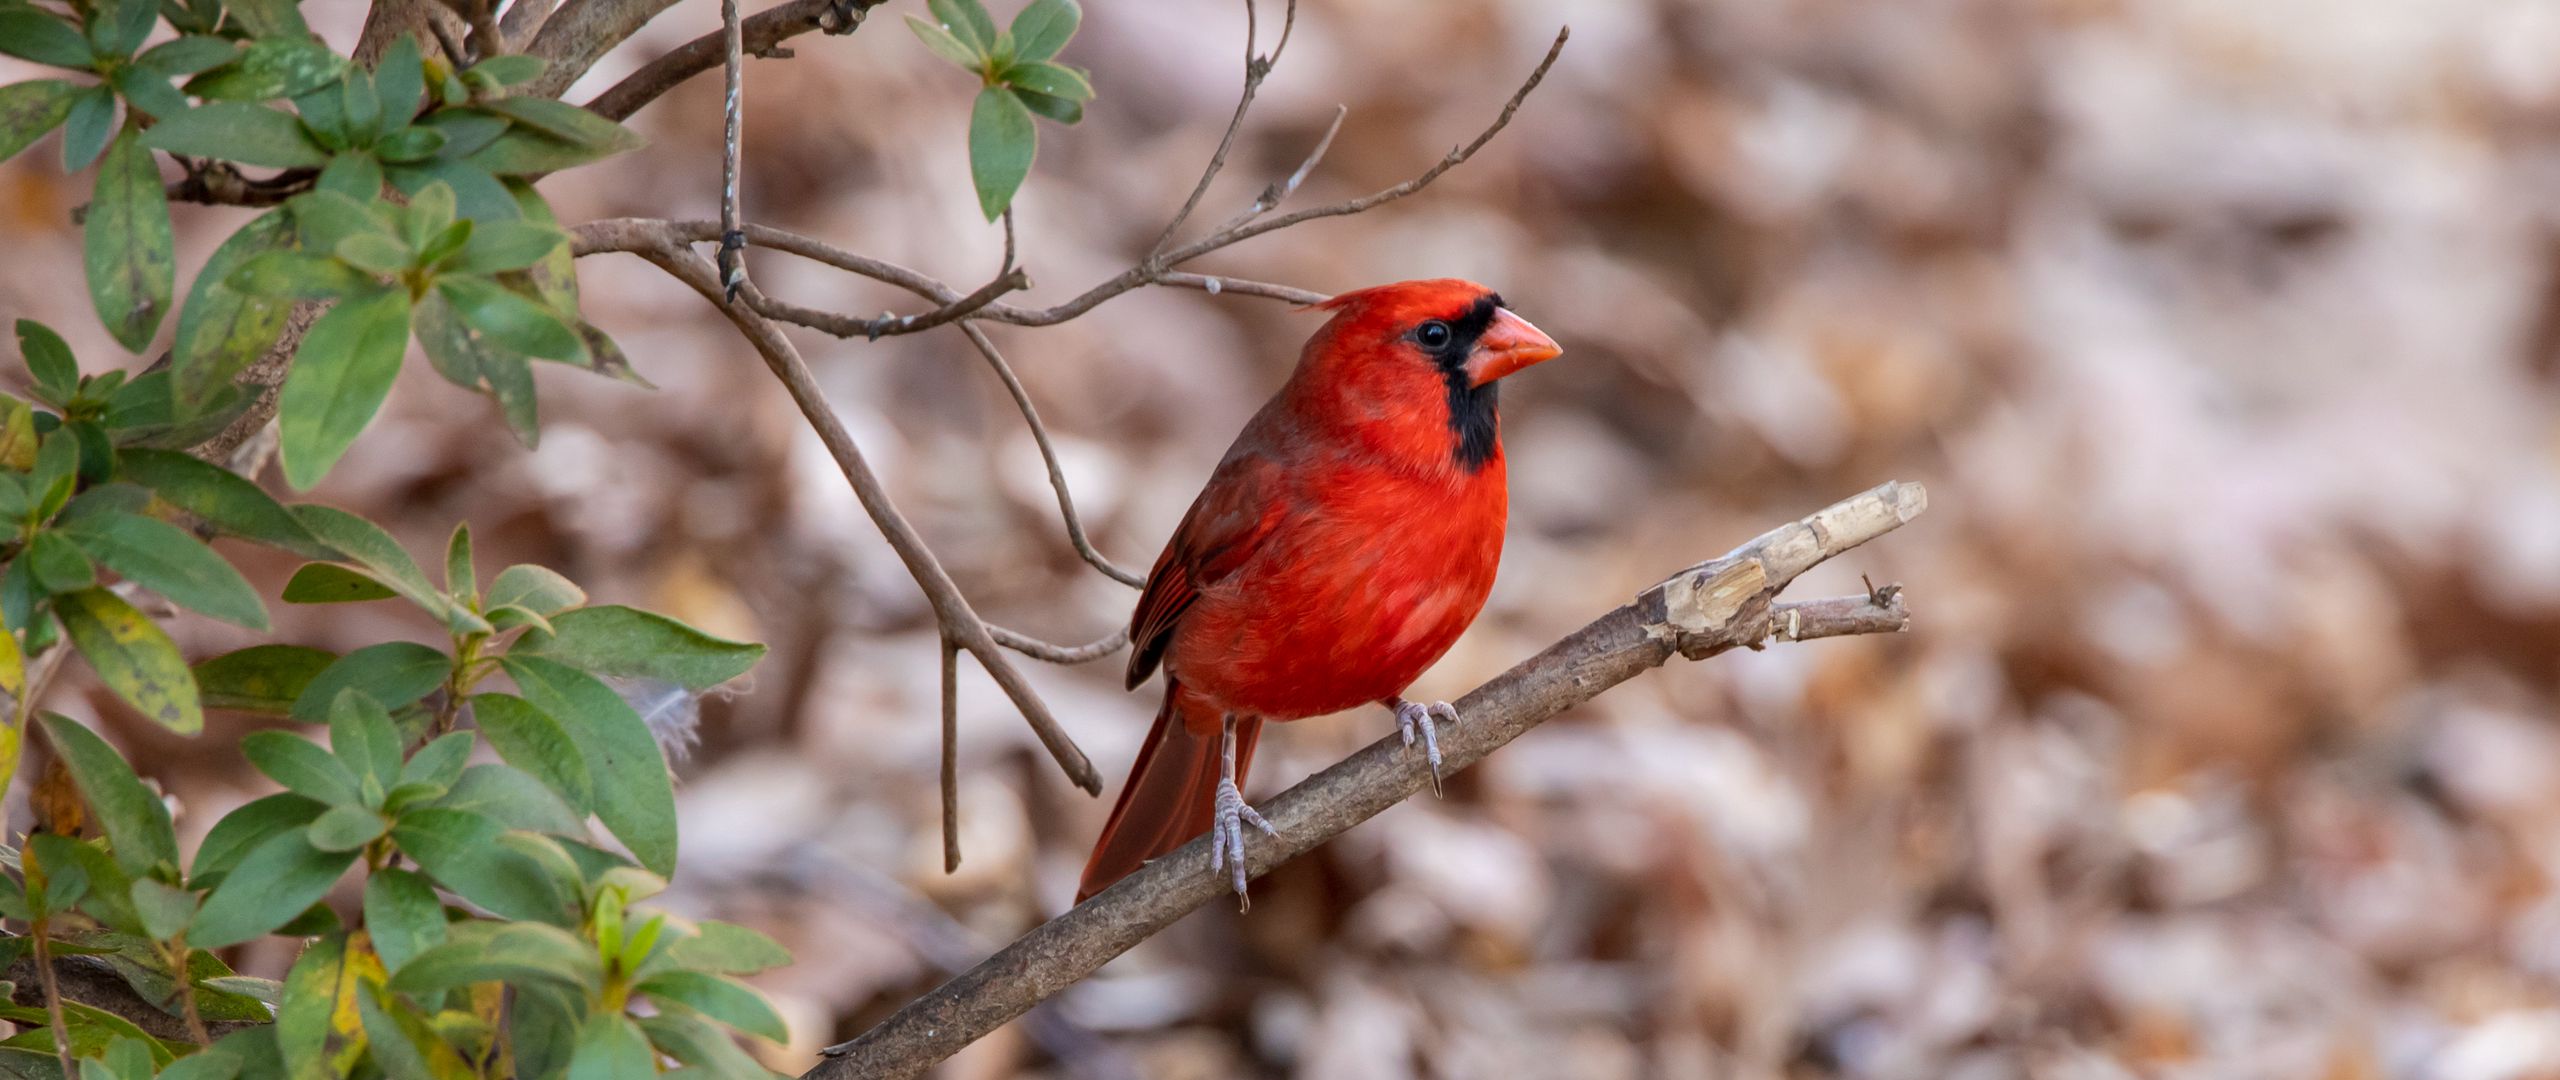 Wallpaper Red Cardinal